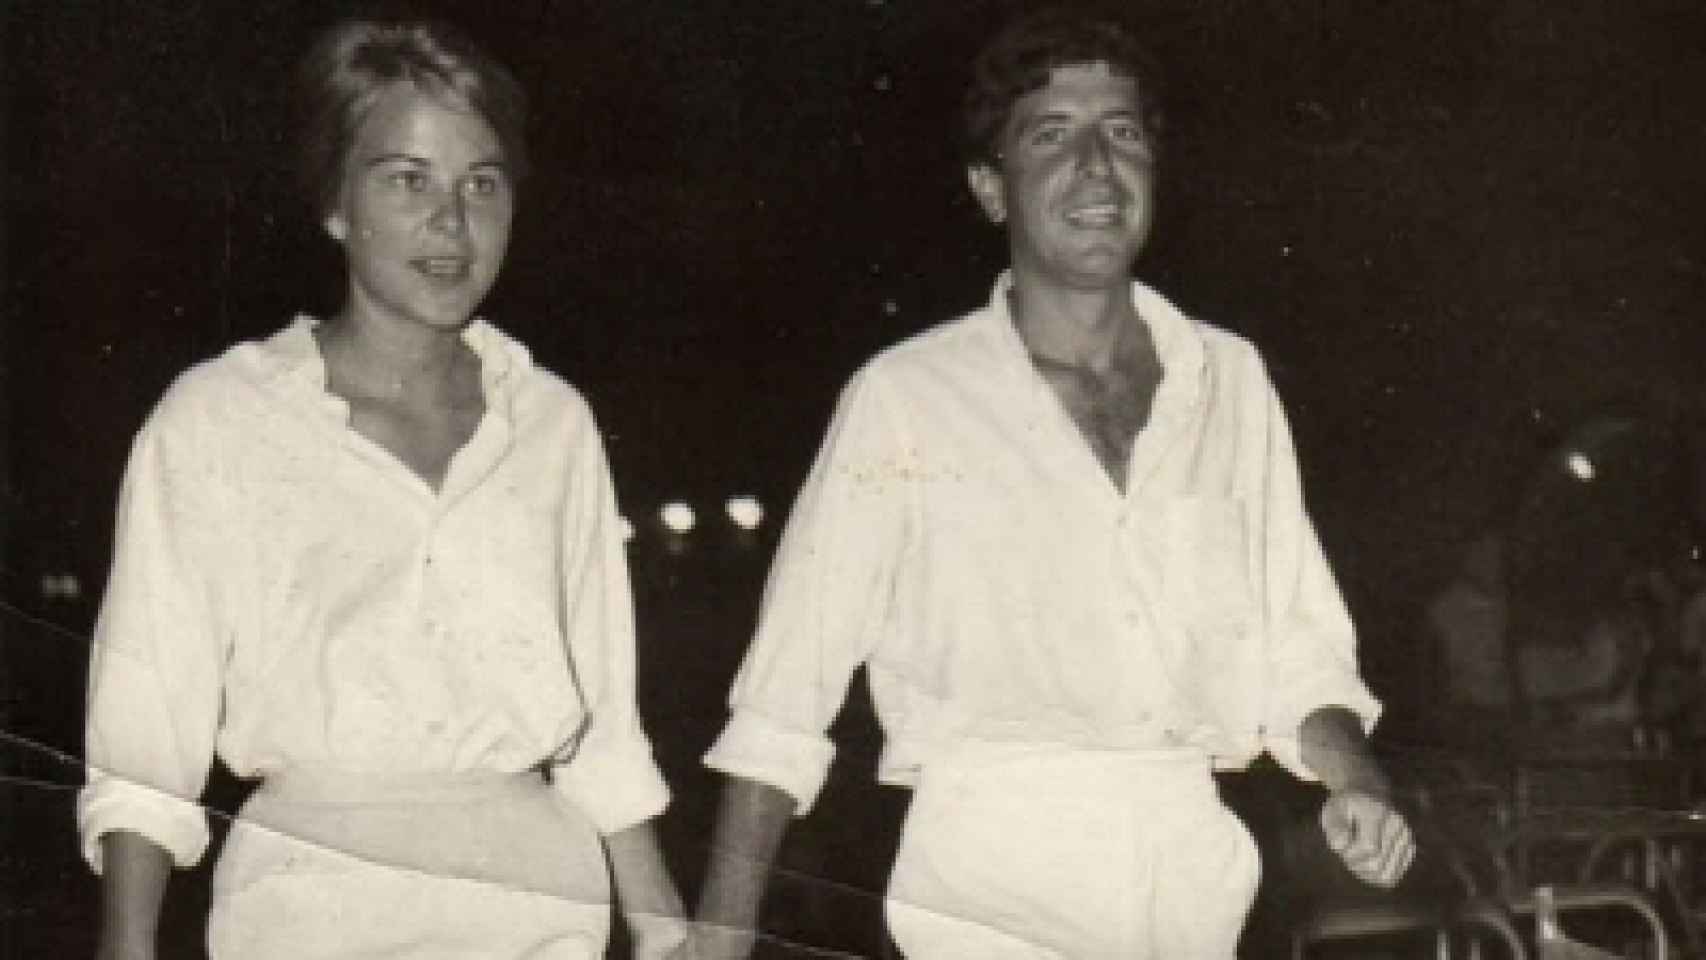 Marianne Ihlen y Leonard Cohen de jóvenes